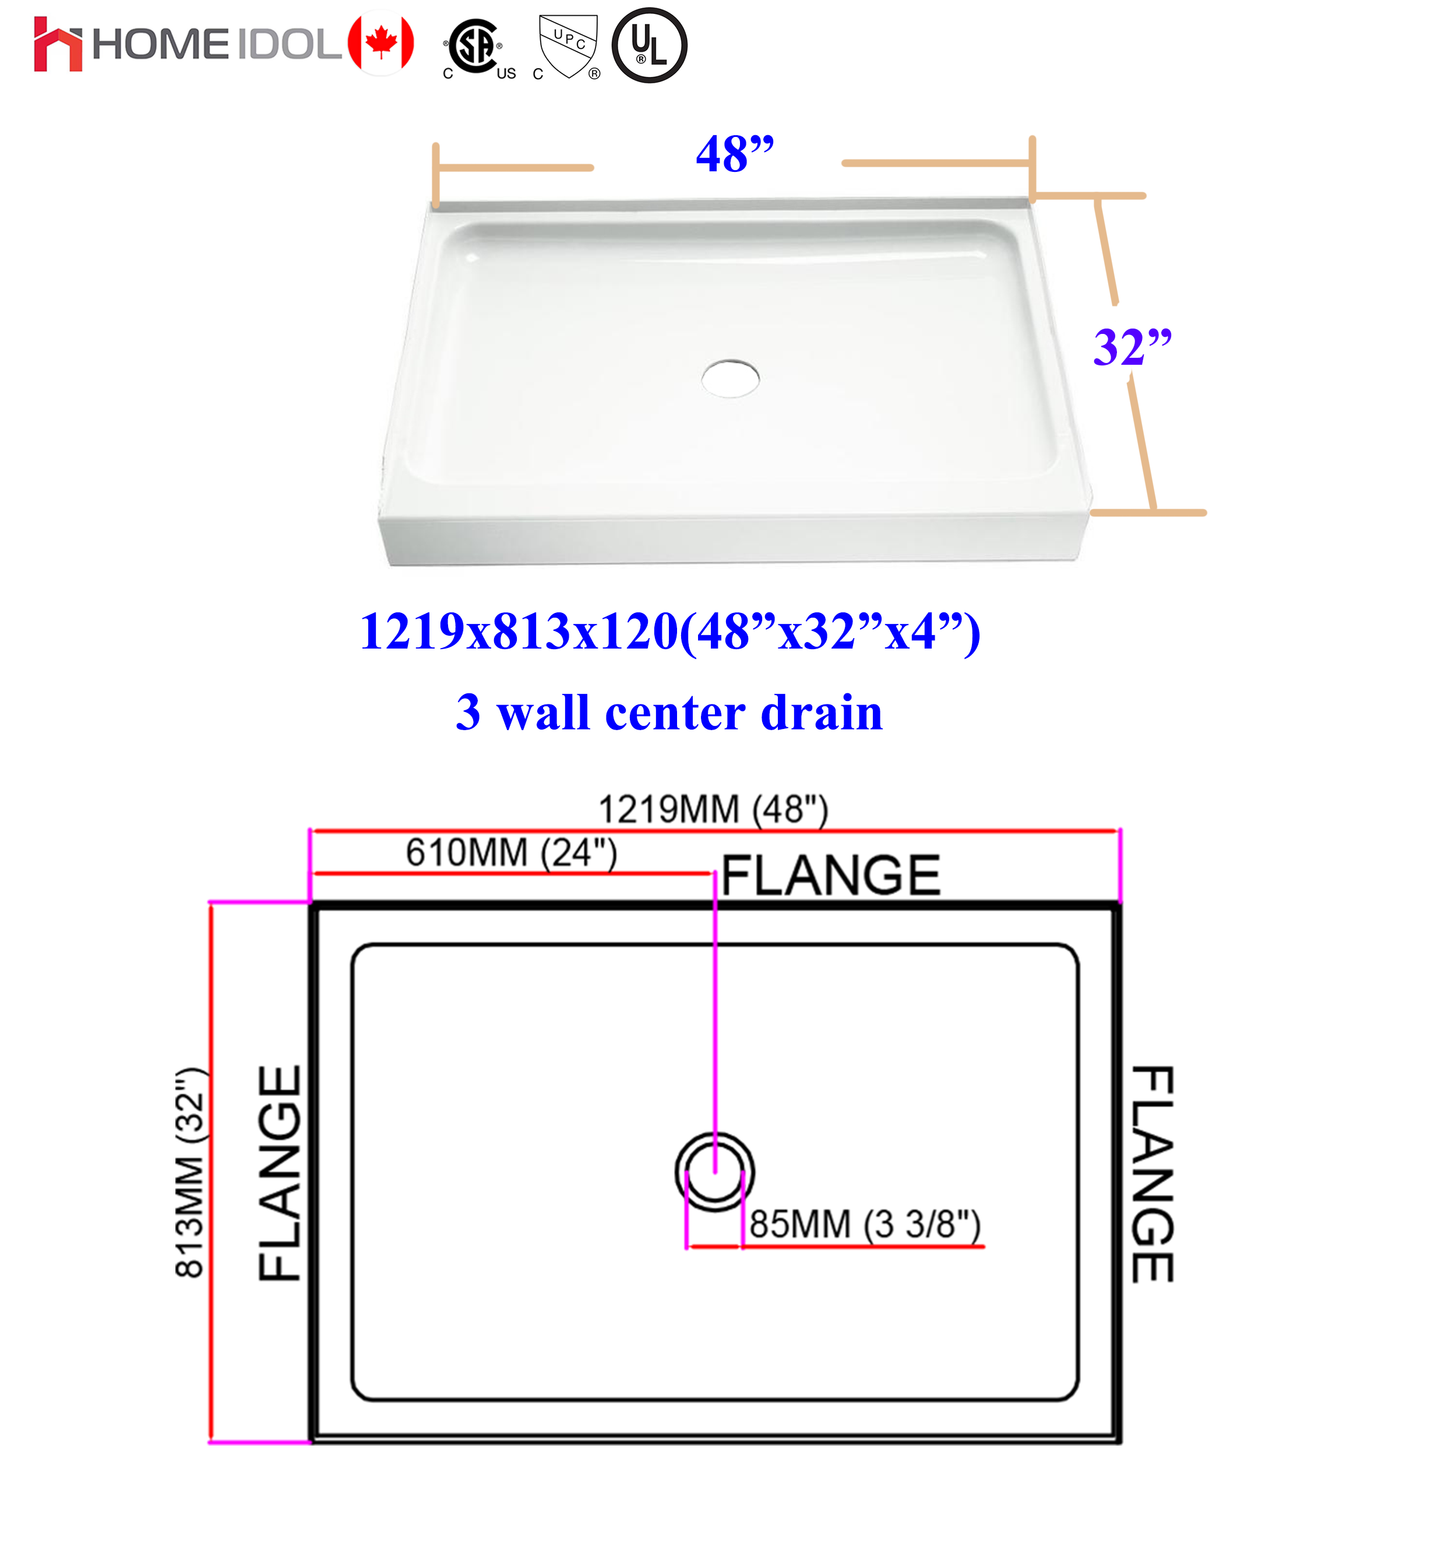 shower base #8 acrylic shower base 3 walls centre drain 48"x32"/1220x813mm  model: 7088 (single threshold)  $159